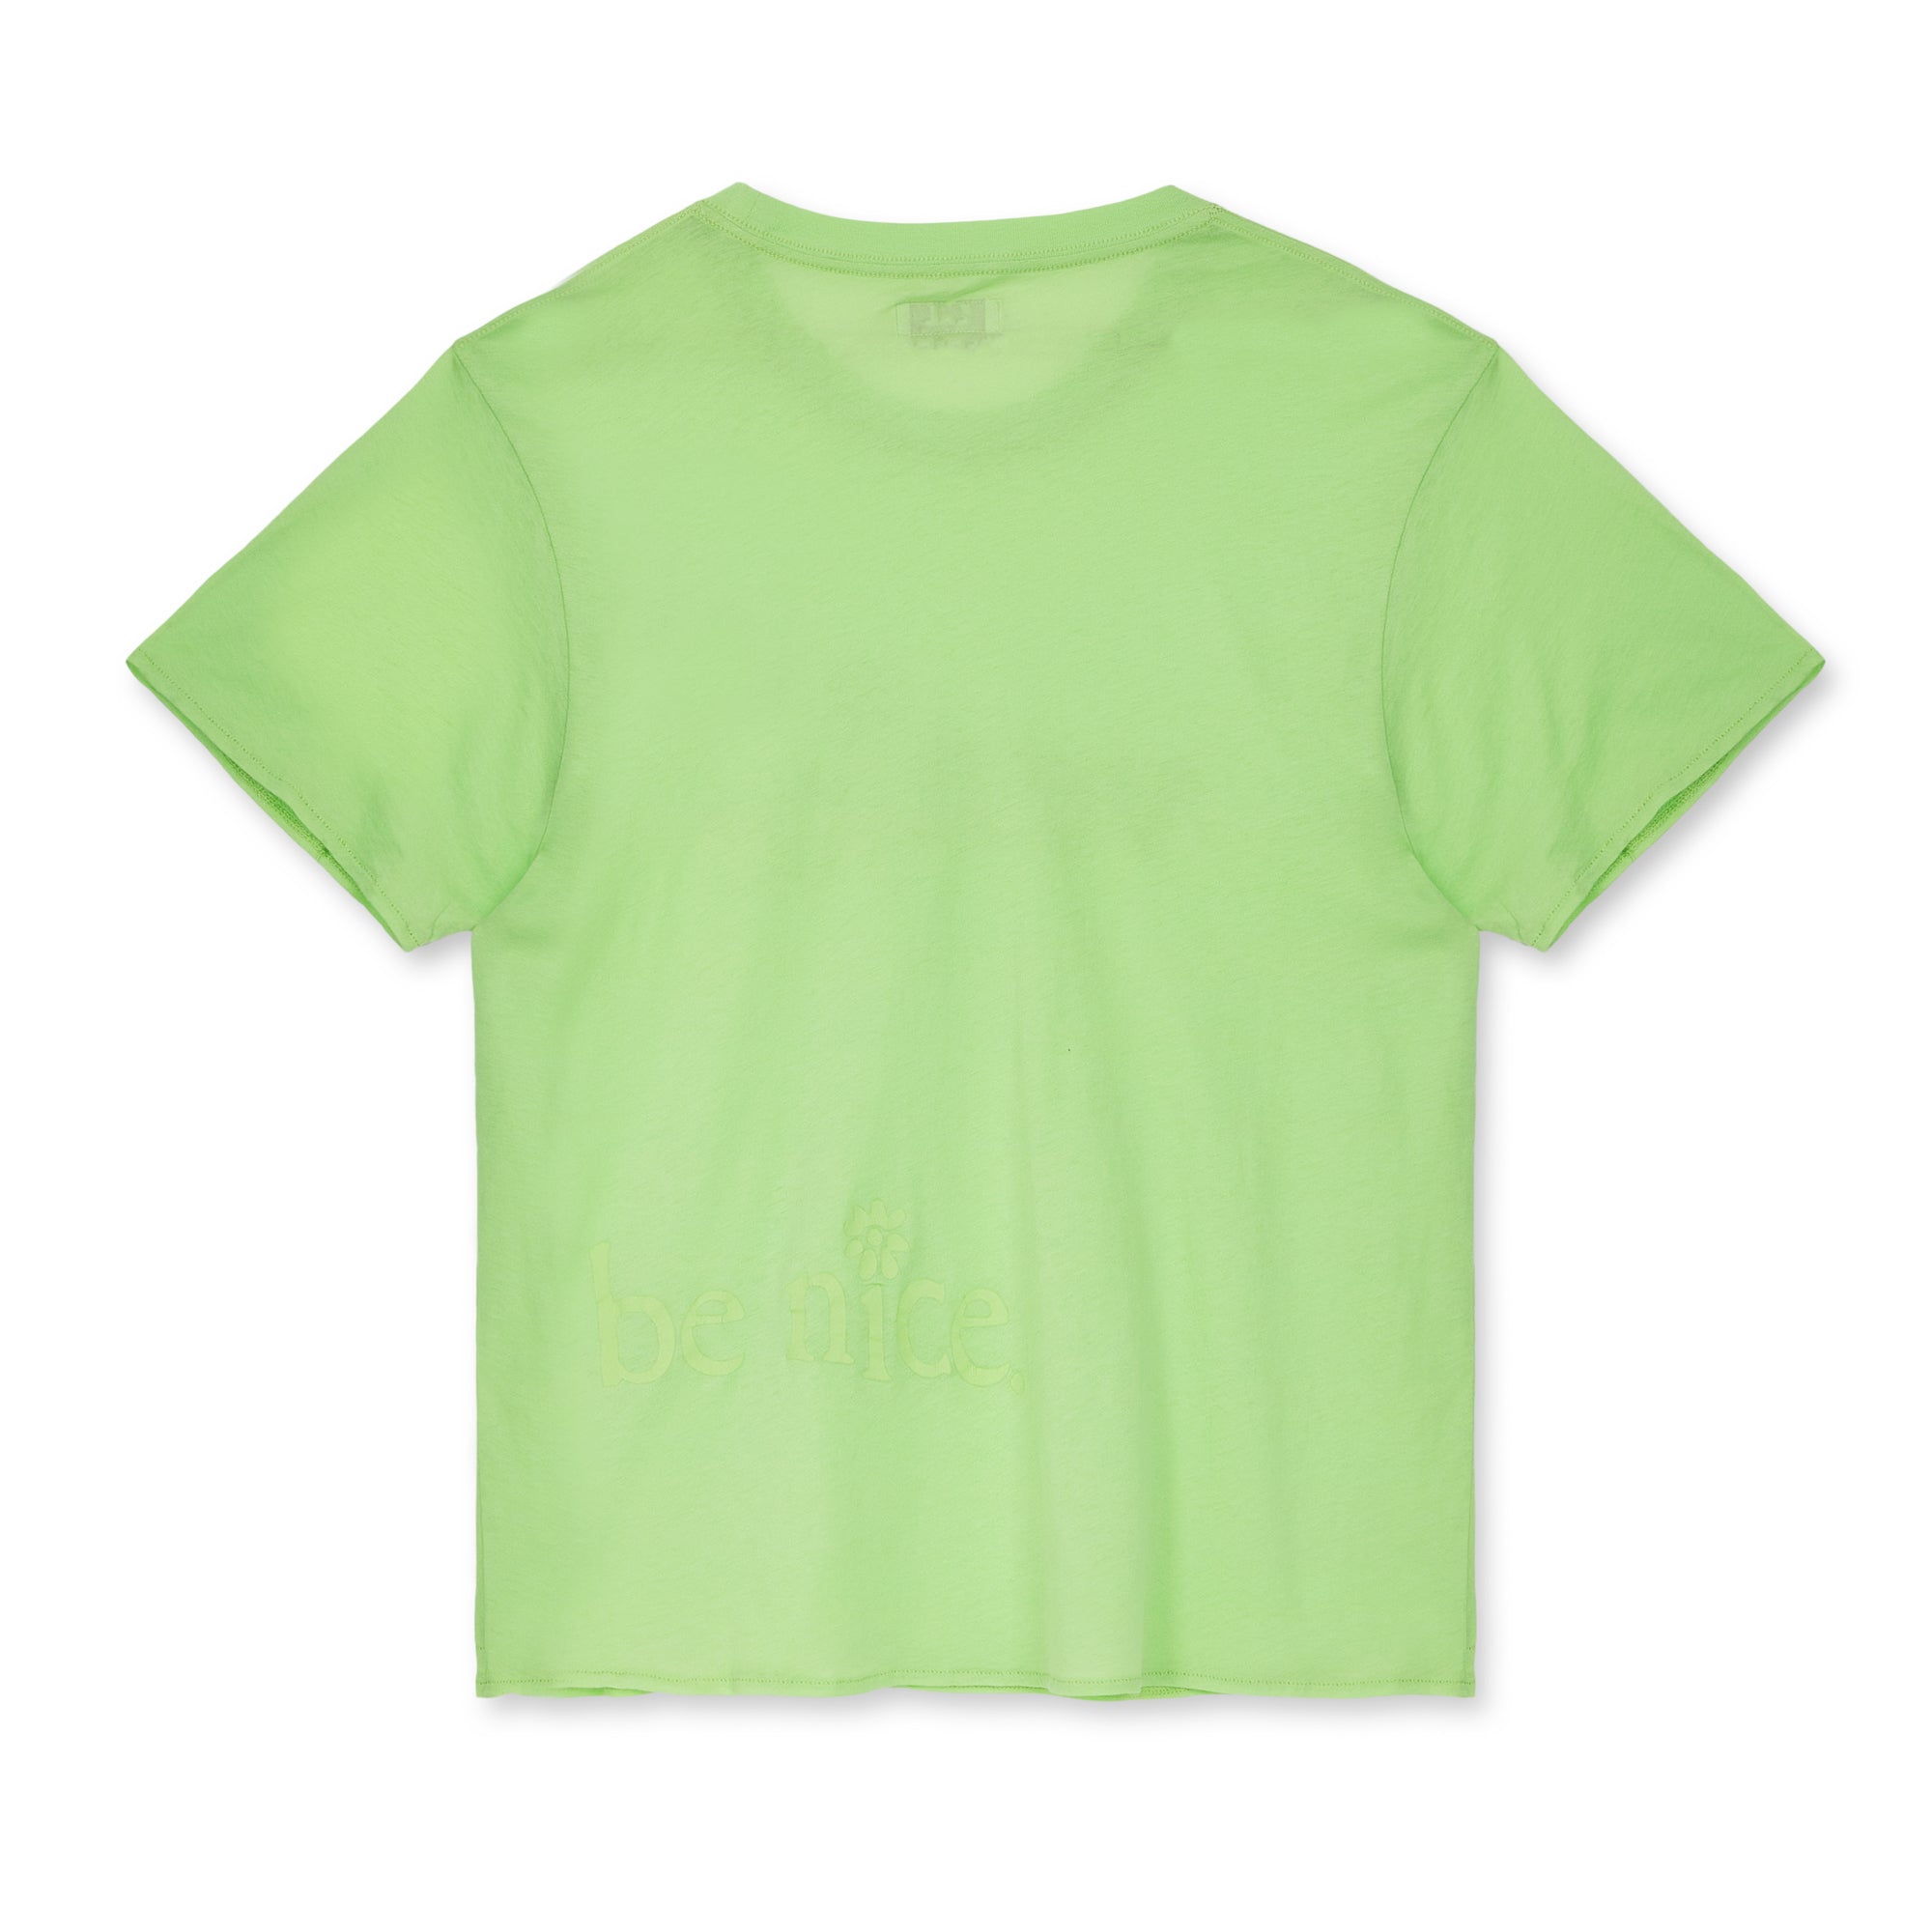 ERL - Men's Venice T-Shirt Knit - (Green) view 2